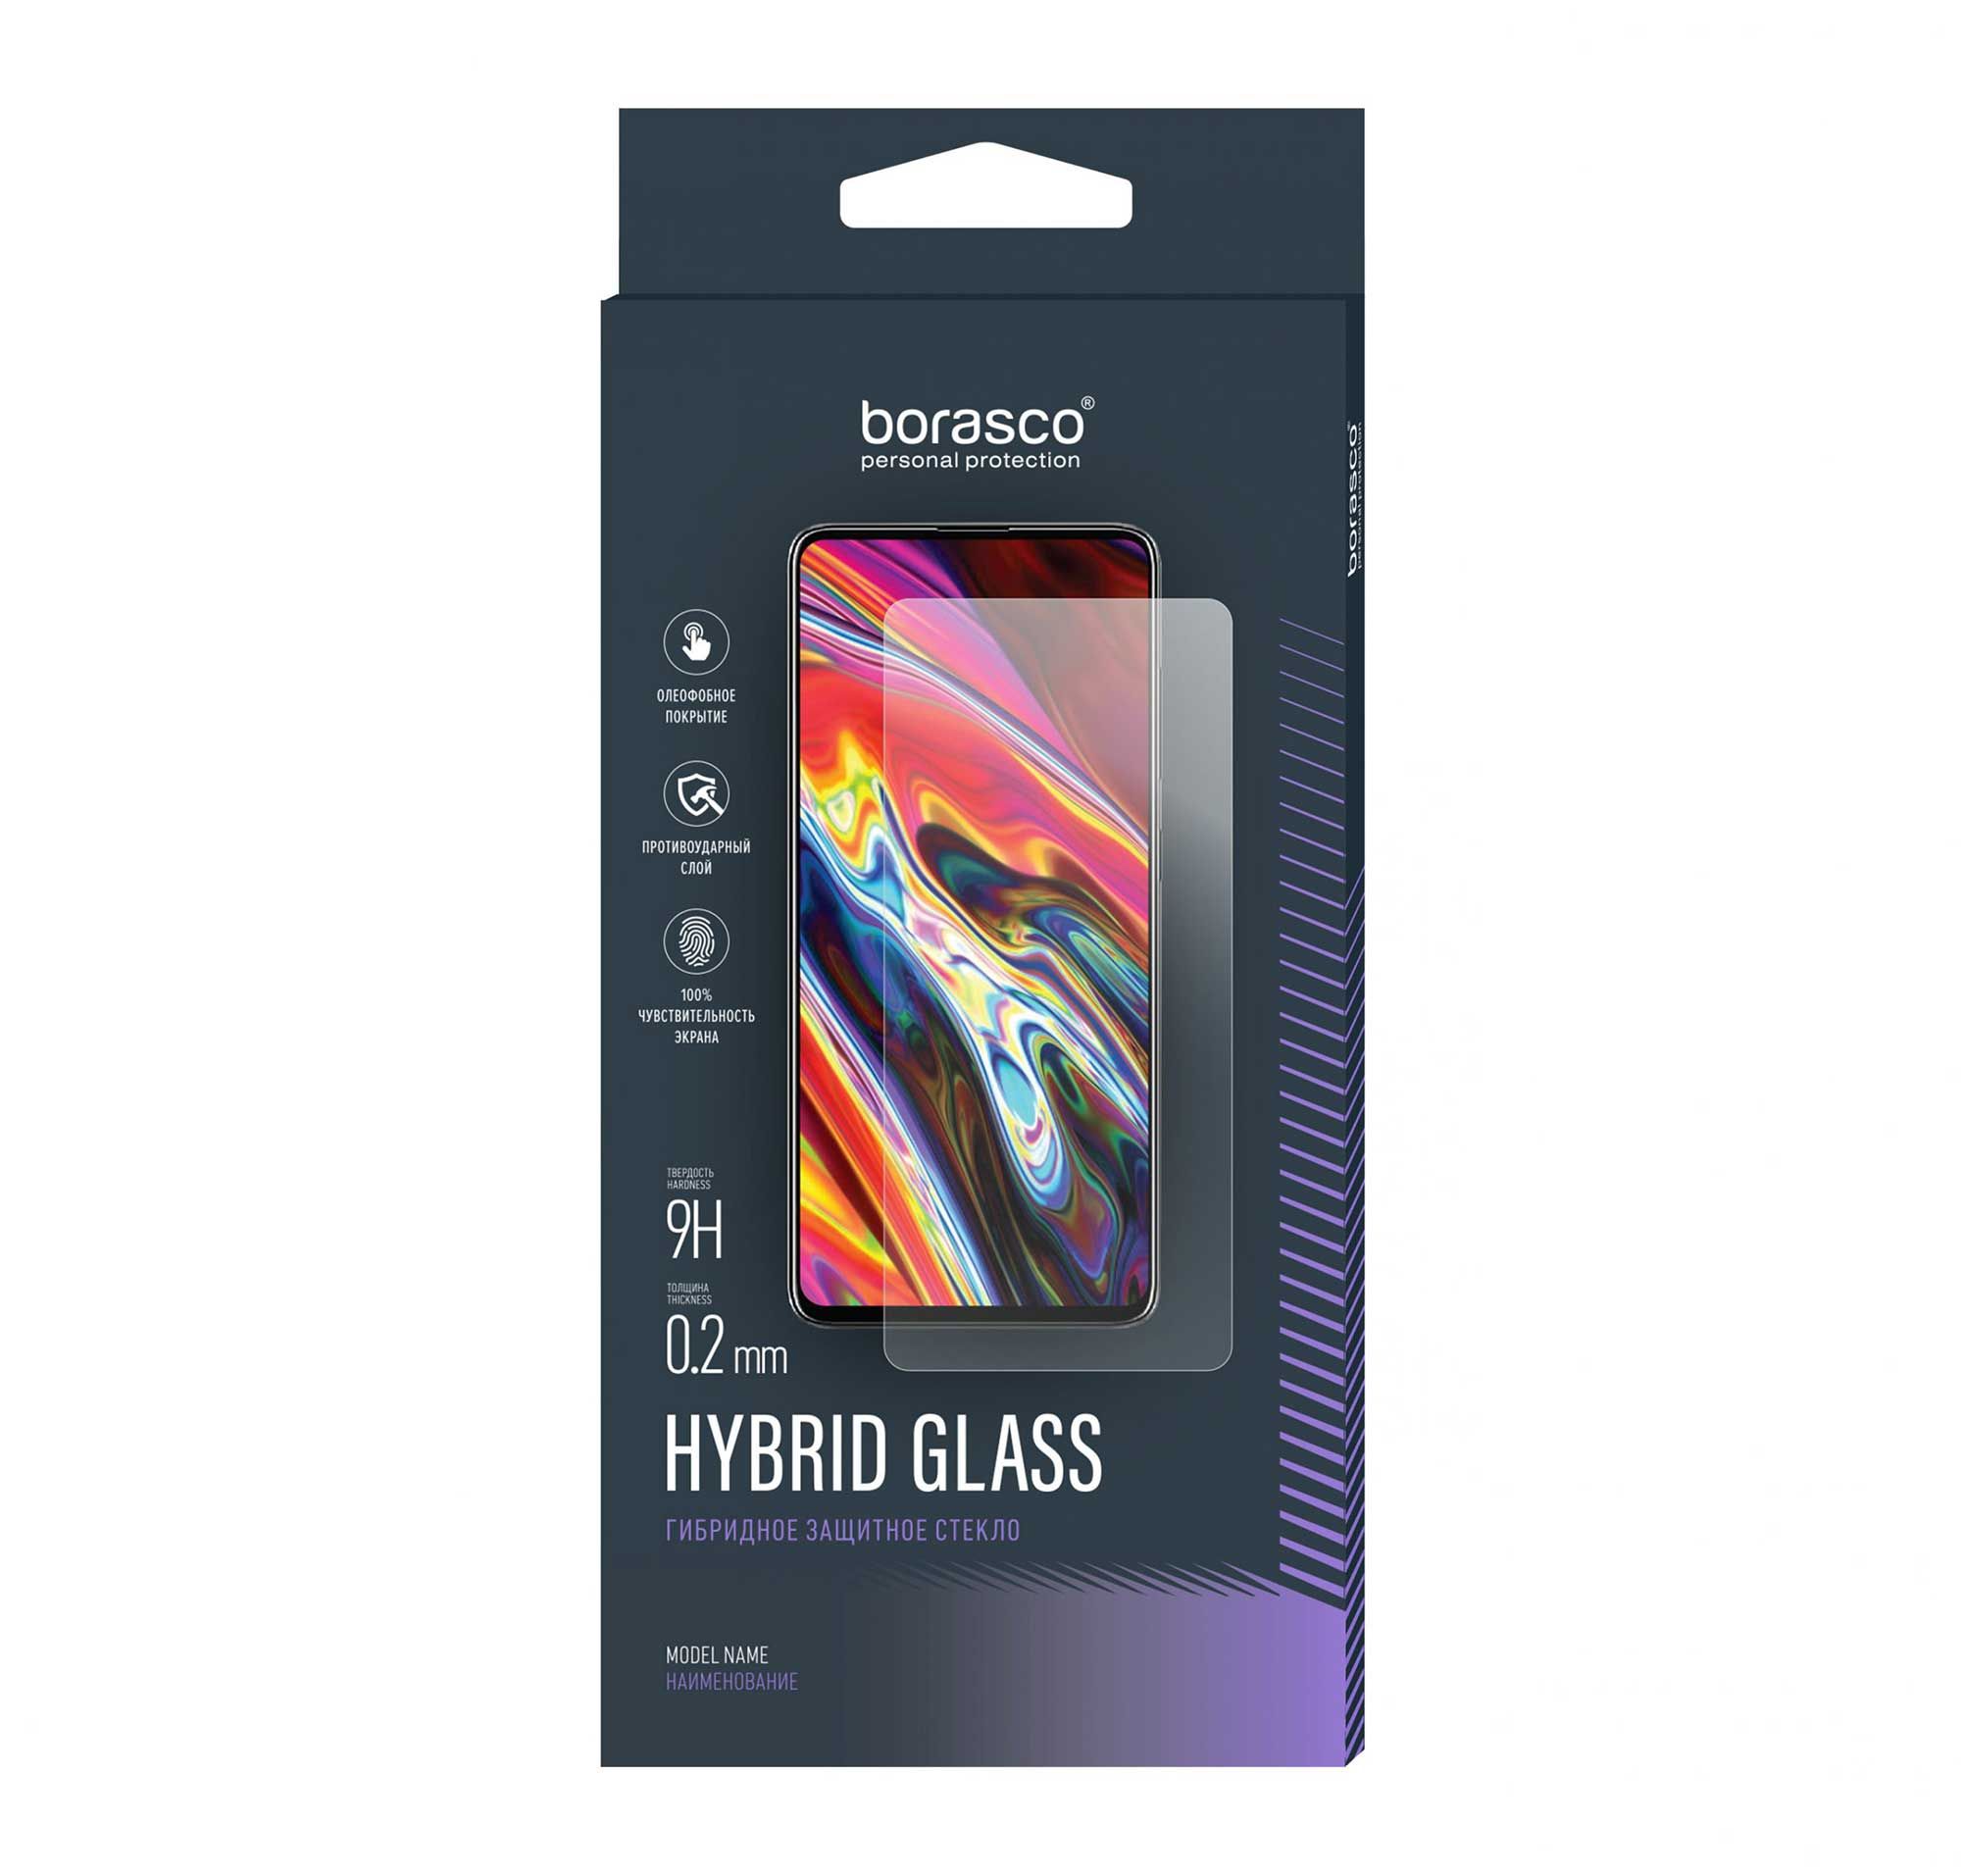 Защитное стекло Hybrid Glass для TCL 40R 2 1 шт стекло для tcl 40r 20 a r y s e b v e xe se plus 205 305 защитная пленка для экрана для tcl 30e 30se 30v 30xe 20l 20s 20e 20b стекло